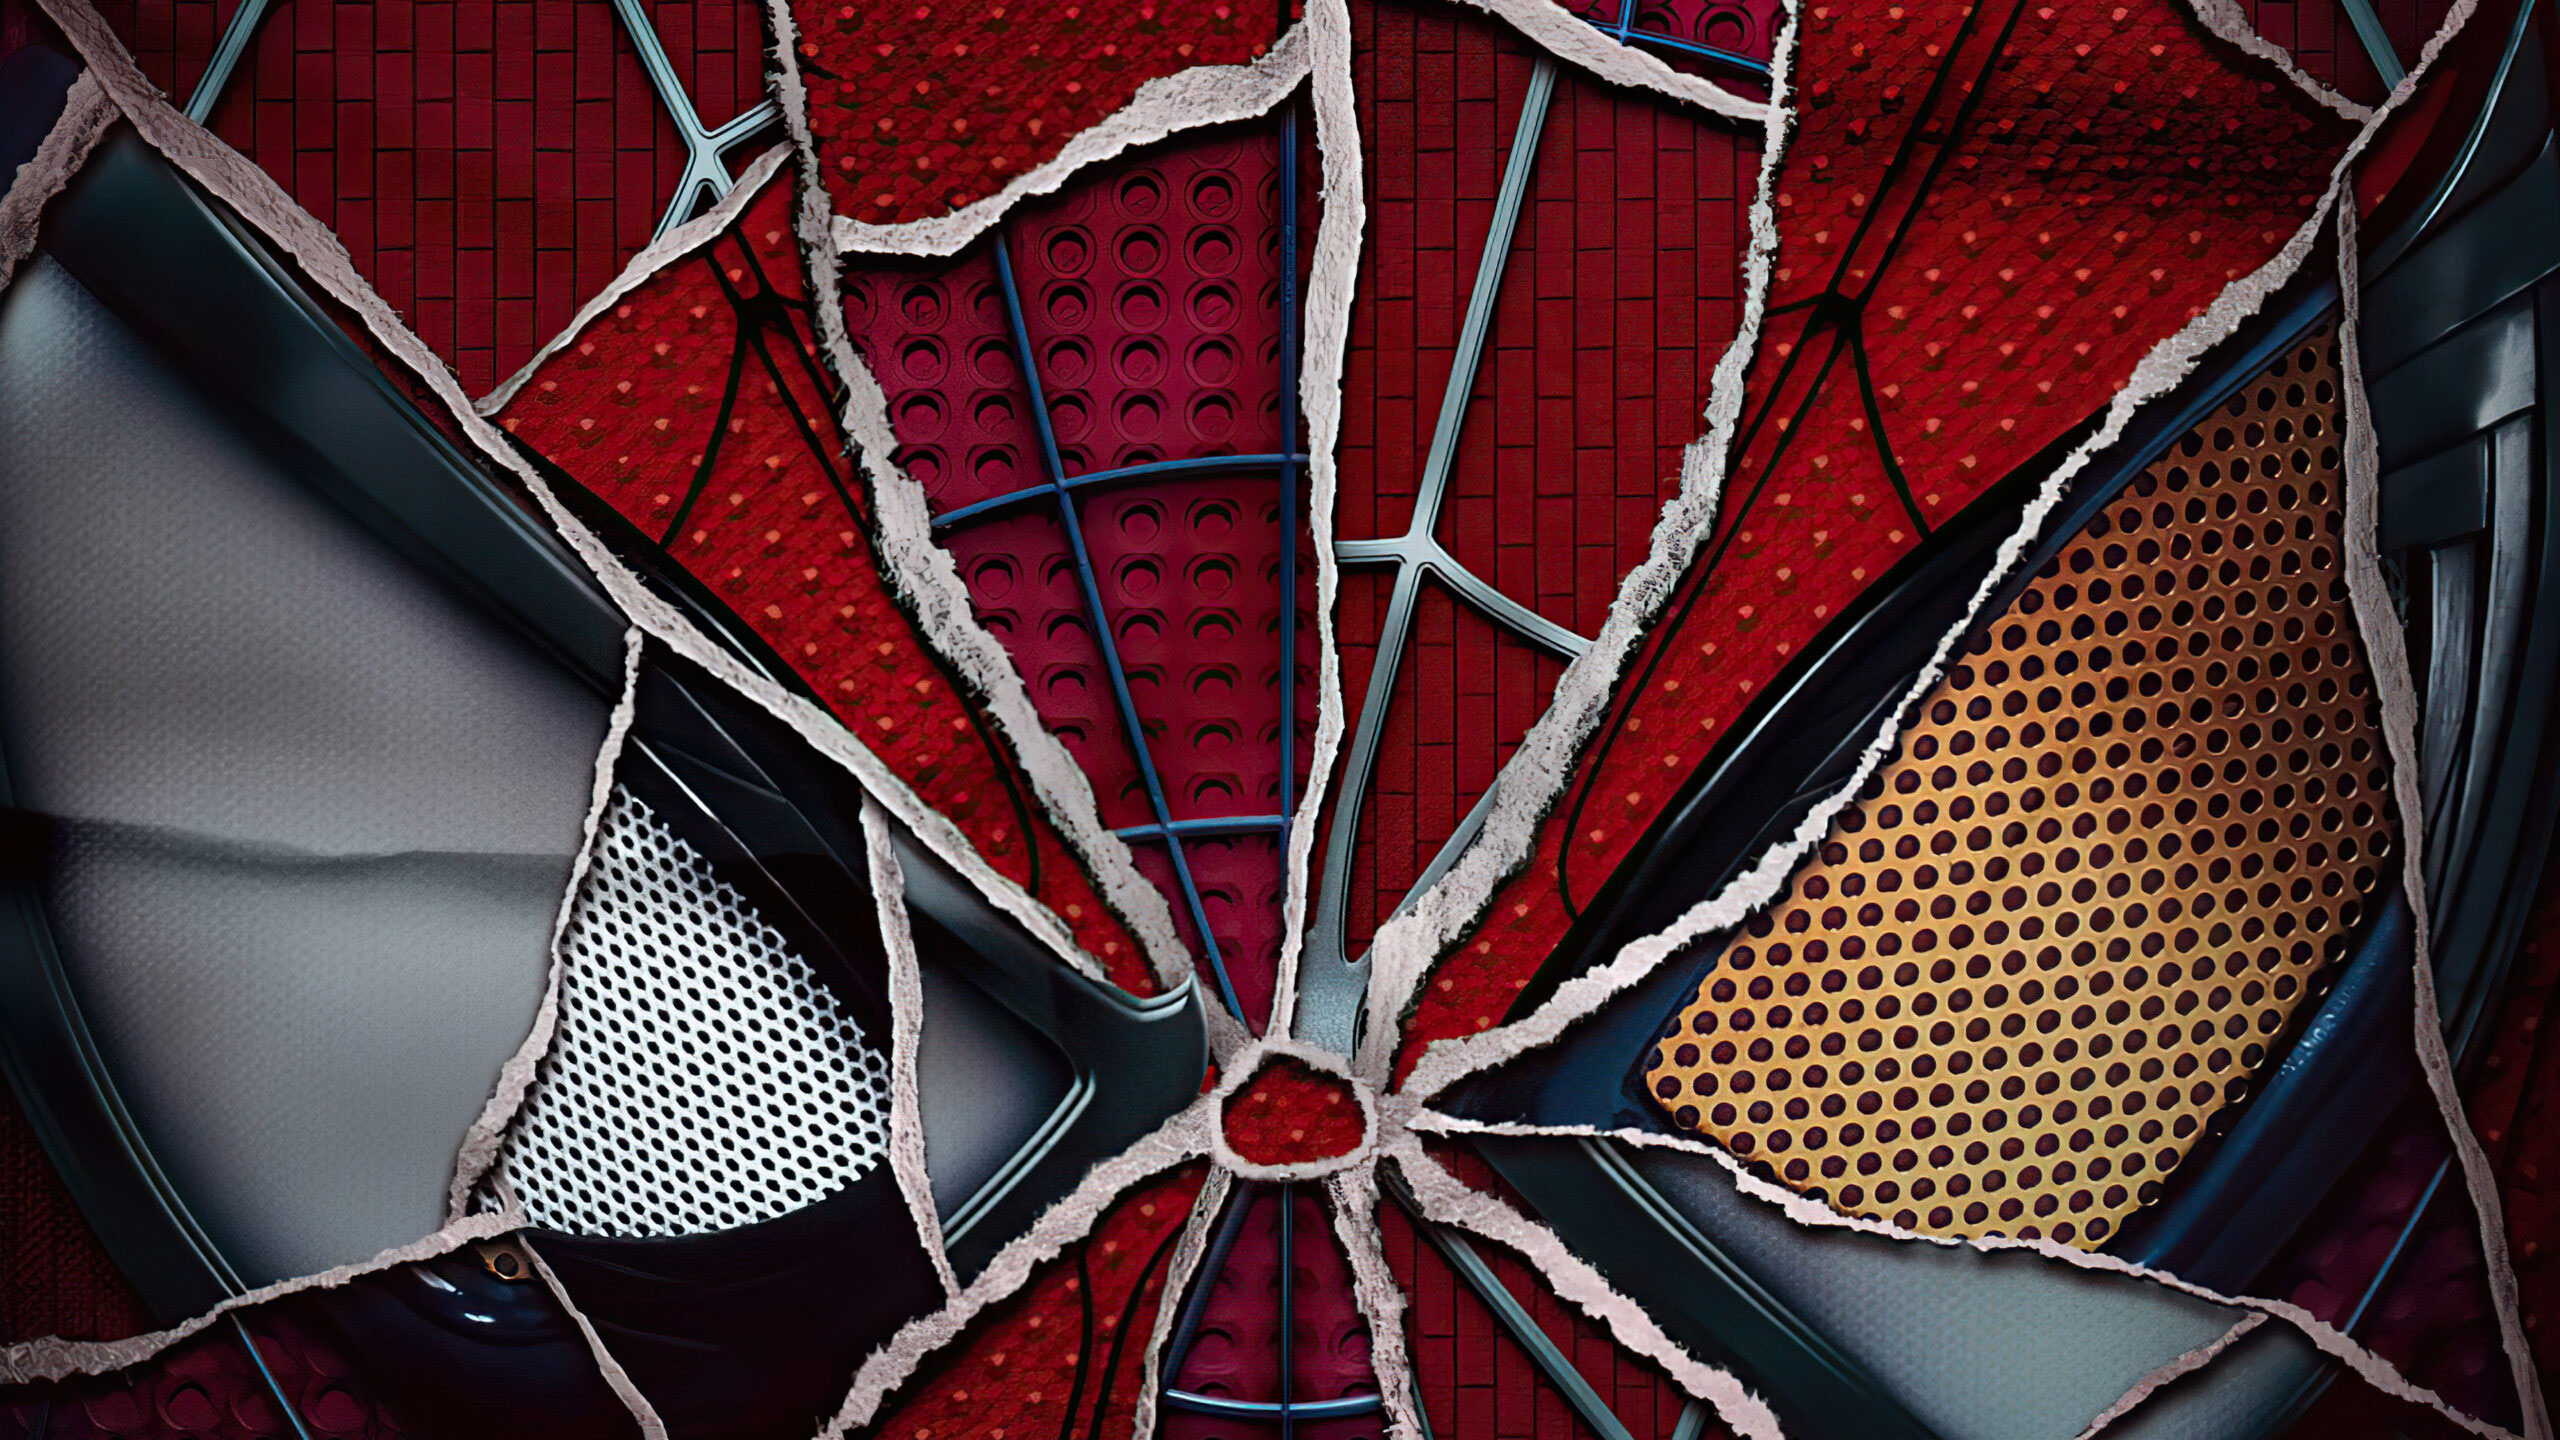 Hd Spiderman No Way Home Laptop Wallpaper